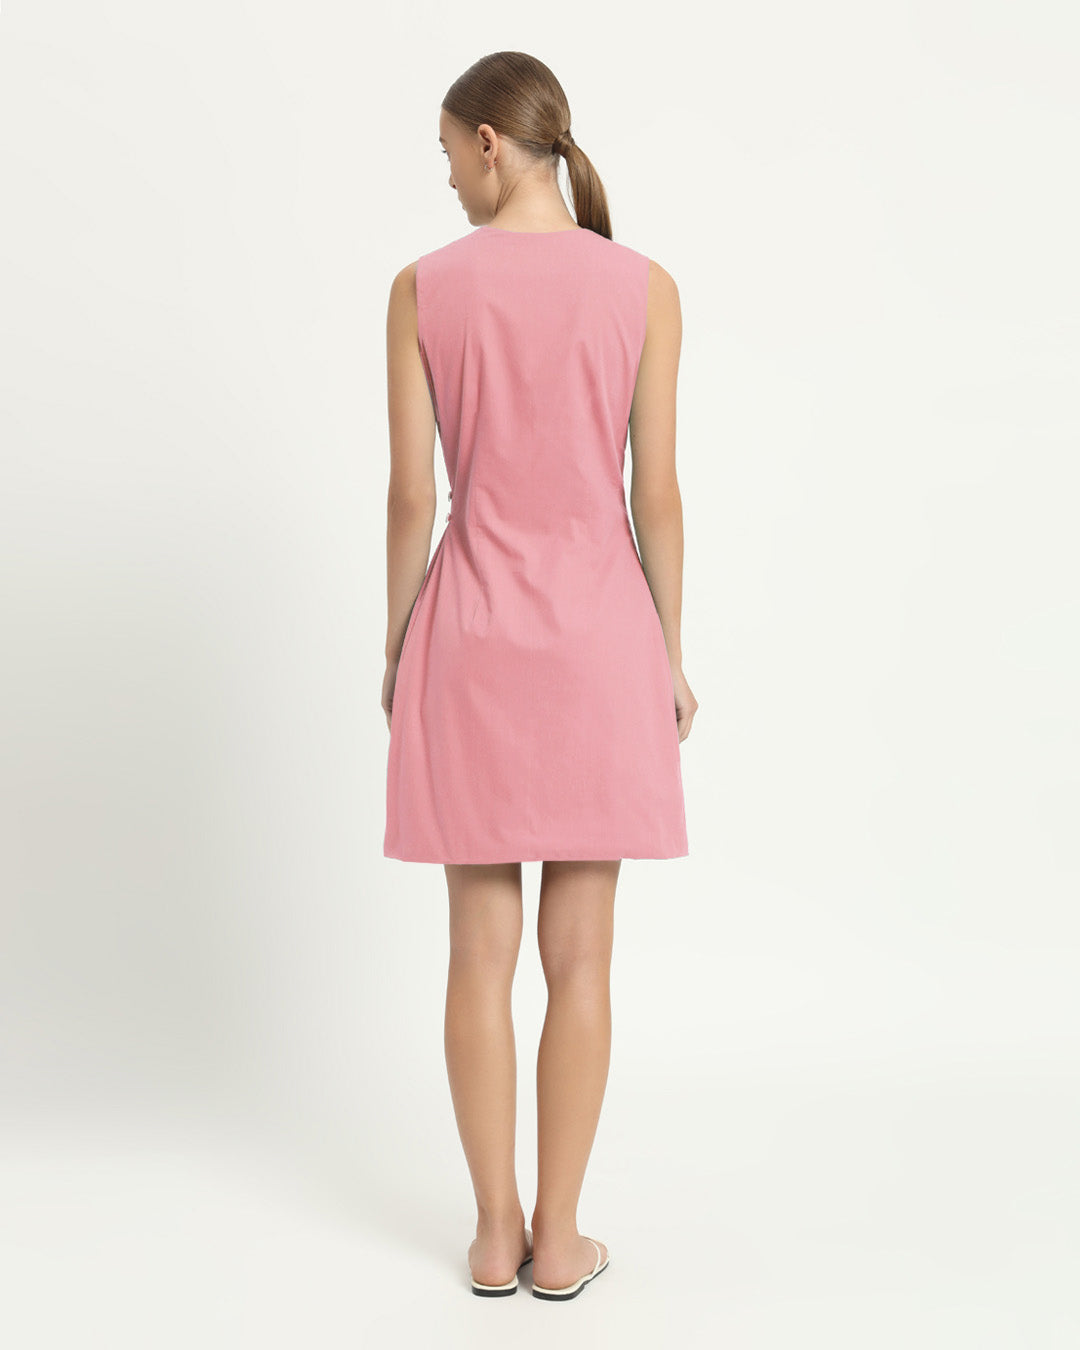 The Augsberg Fondant Pink Cotton Dress